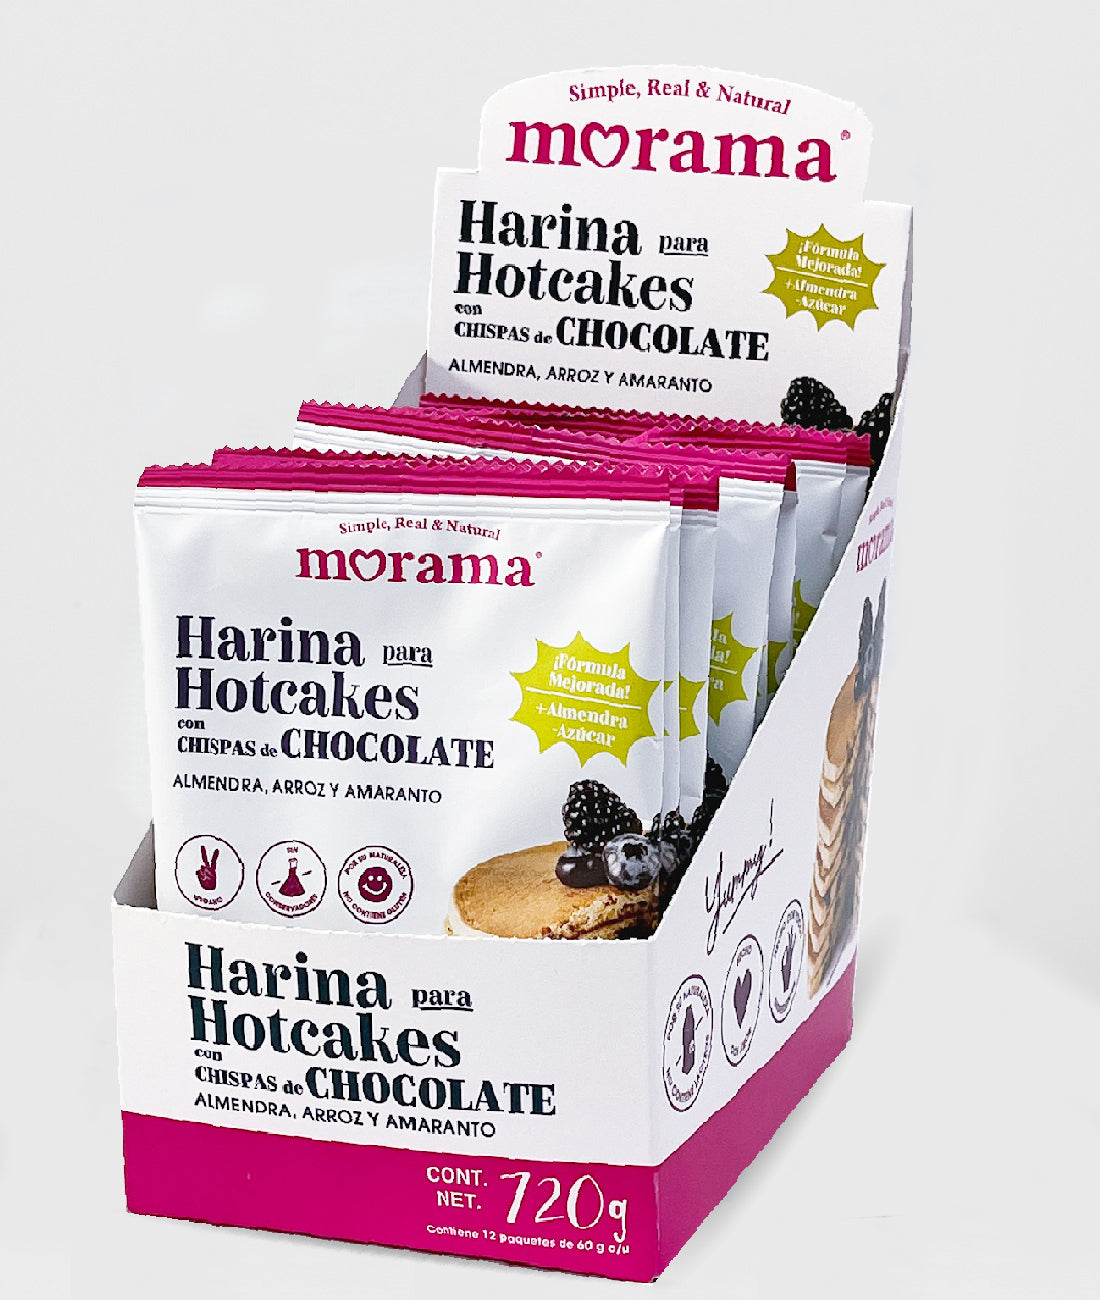 Harina para Hotcakes con Chispas 12 pack de 60 g